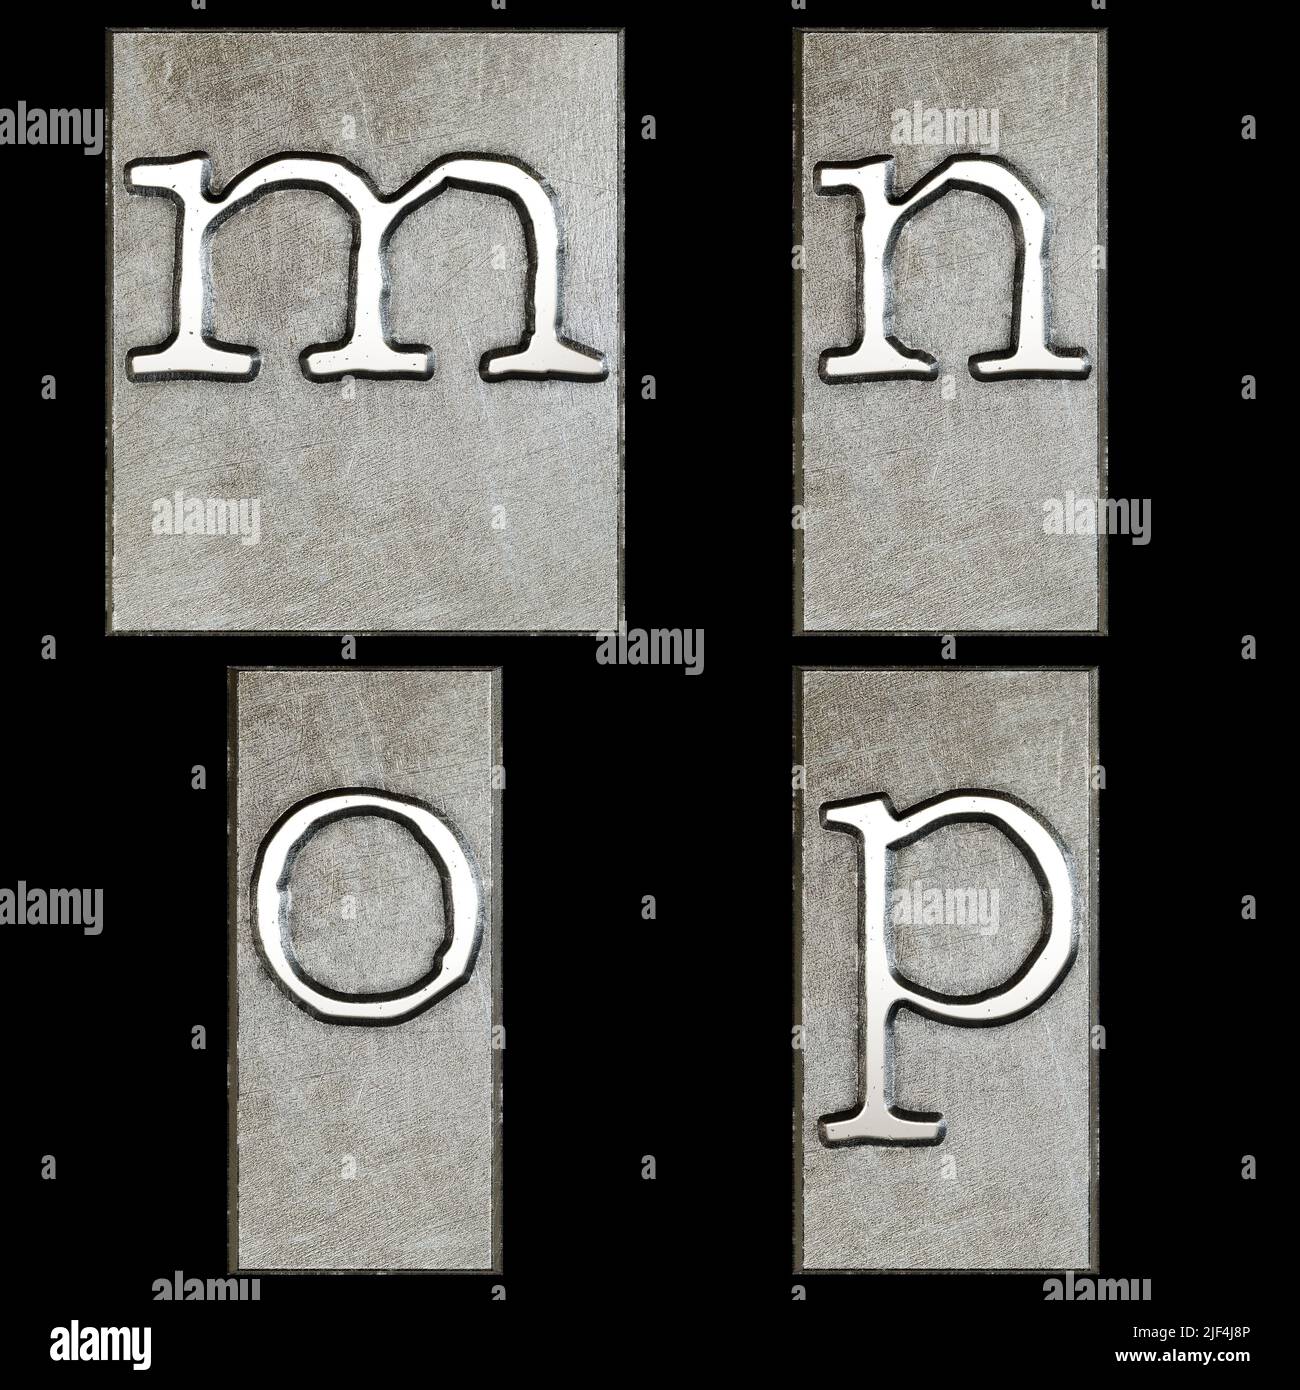 3D rendering of metal typewriter print head alphabet - lower case letters m-p Stock Photo